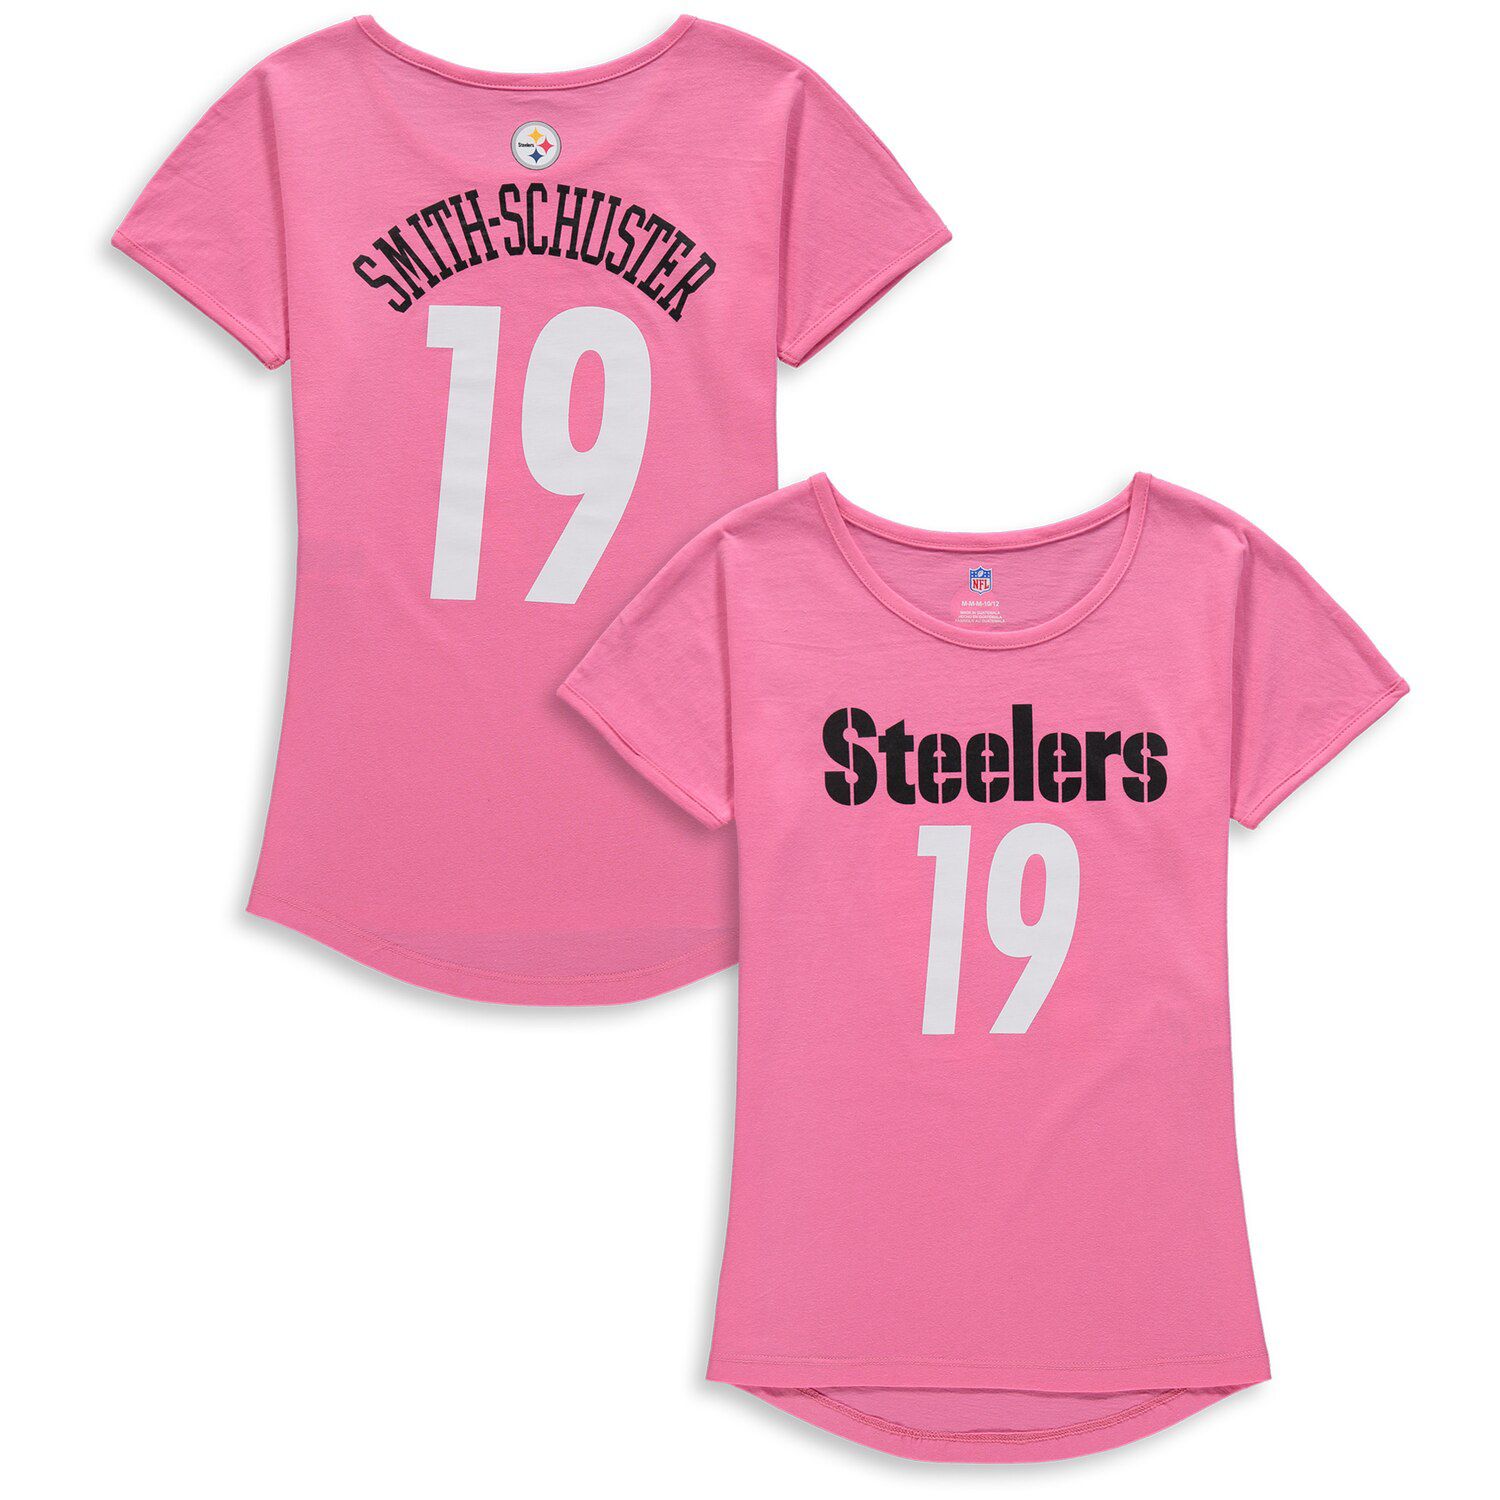 girls pittsburgh steelers jersey